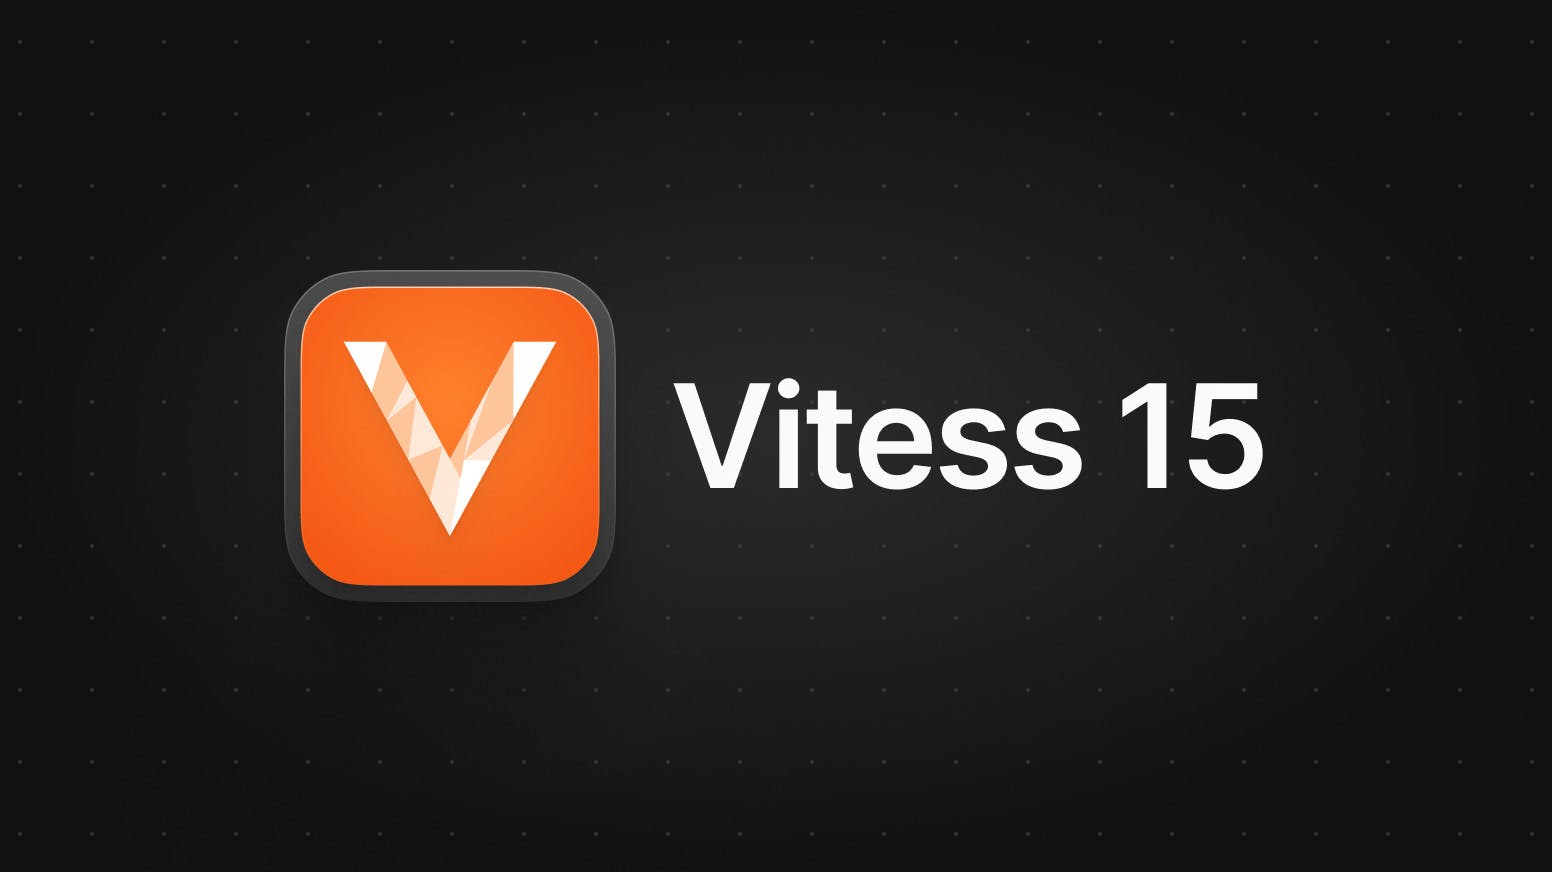 Announcing Vitess 15